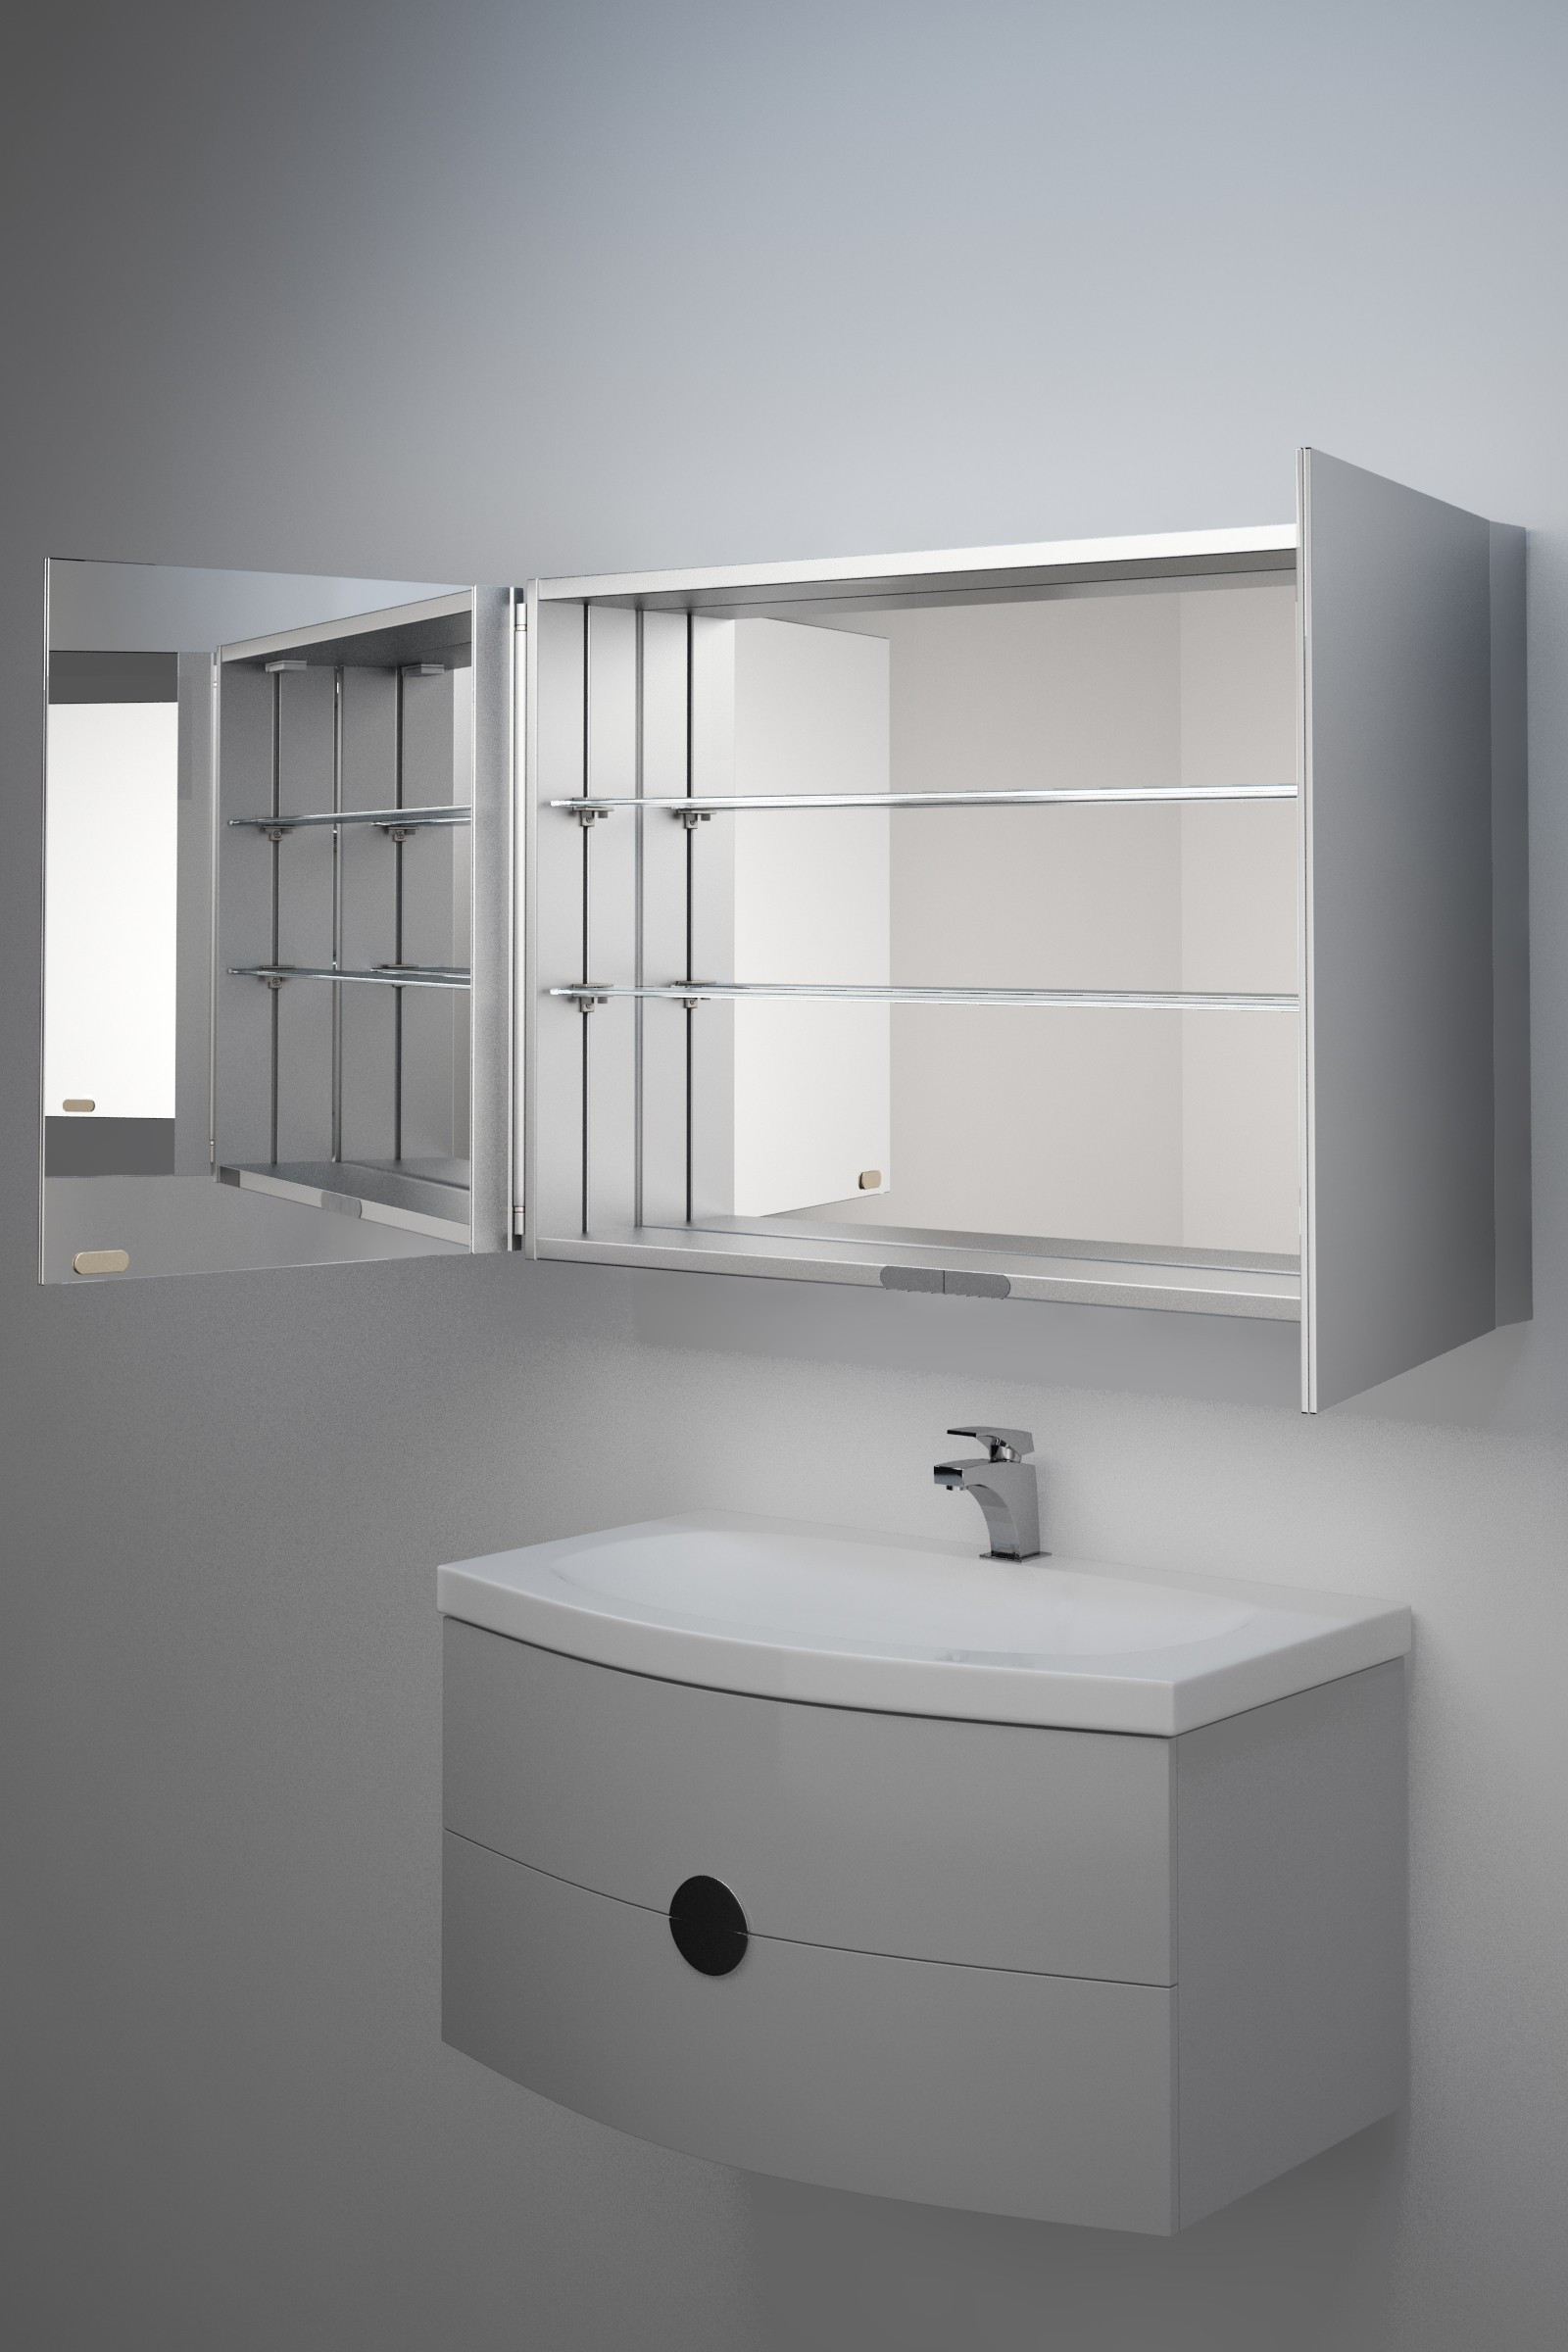 Mirrored Bathroom Cabinets
 Jasmin mirrored bathroom cabinet H 600mm x W 900mm x D